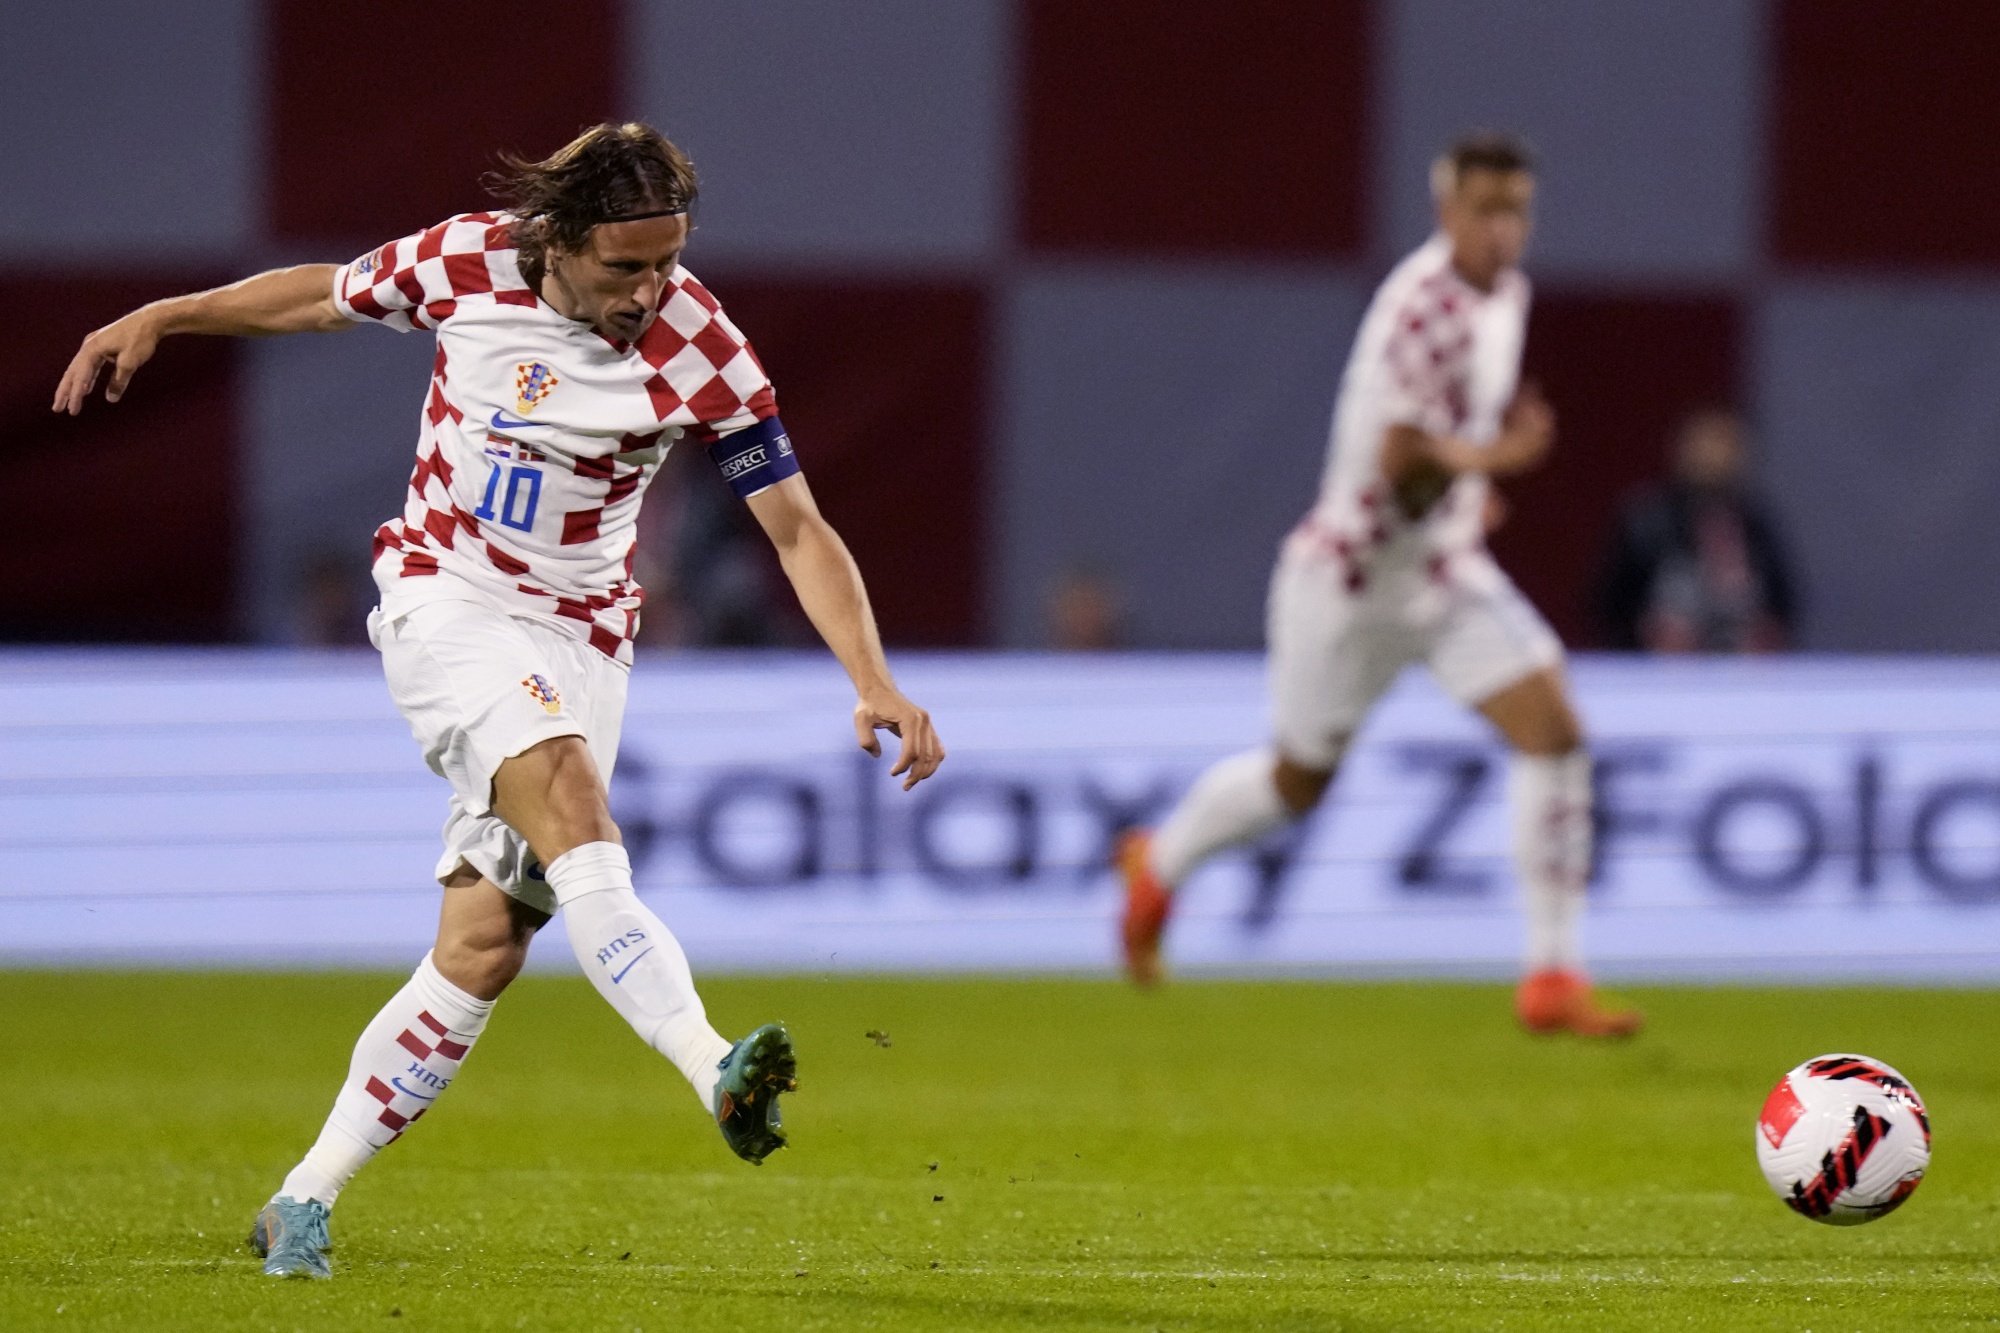 Croatia midfielder Luka Modric wants to compete at Nations League